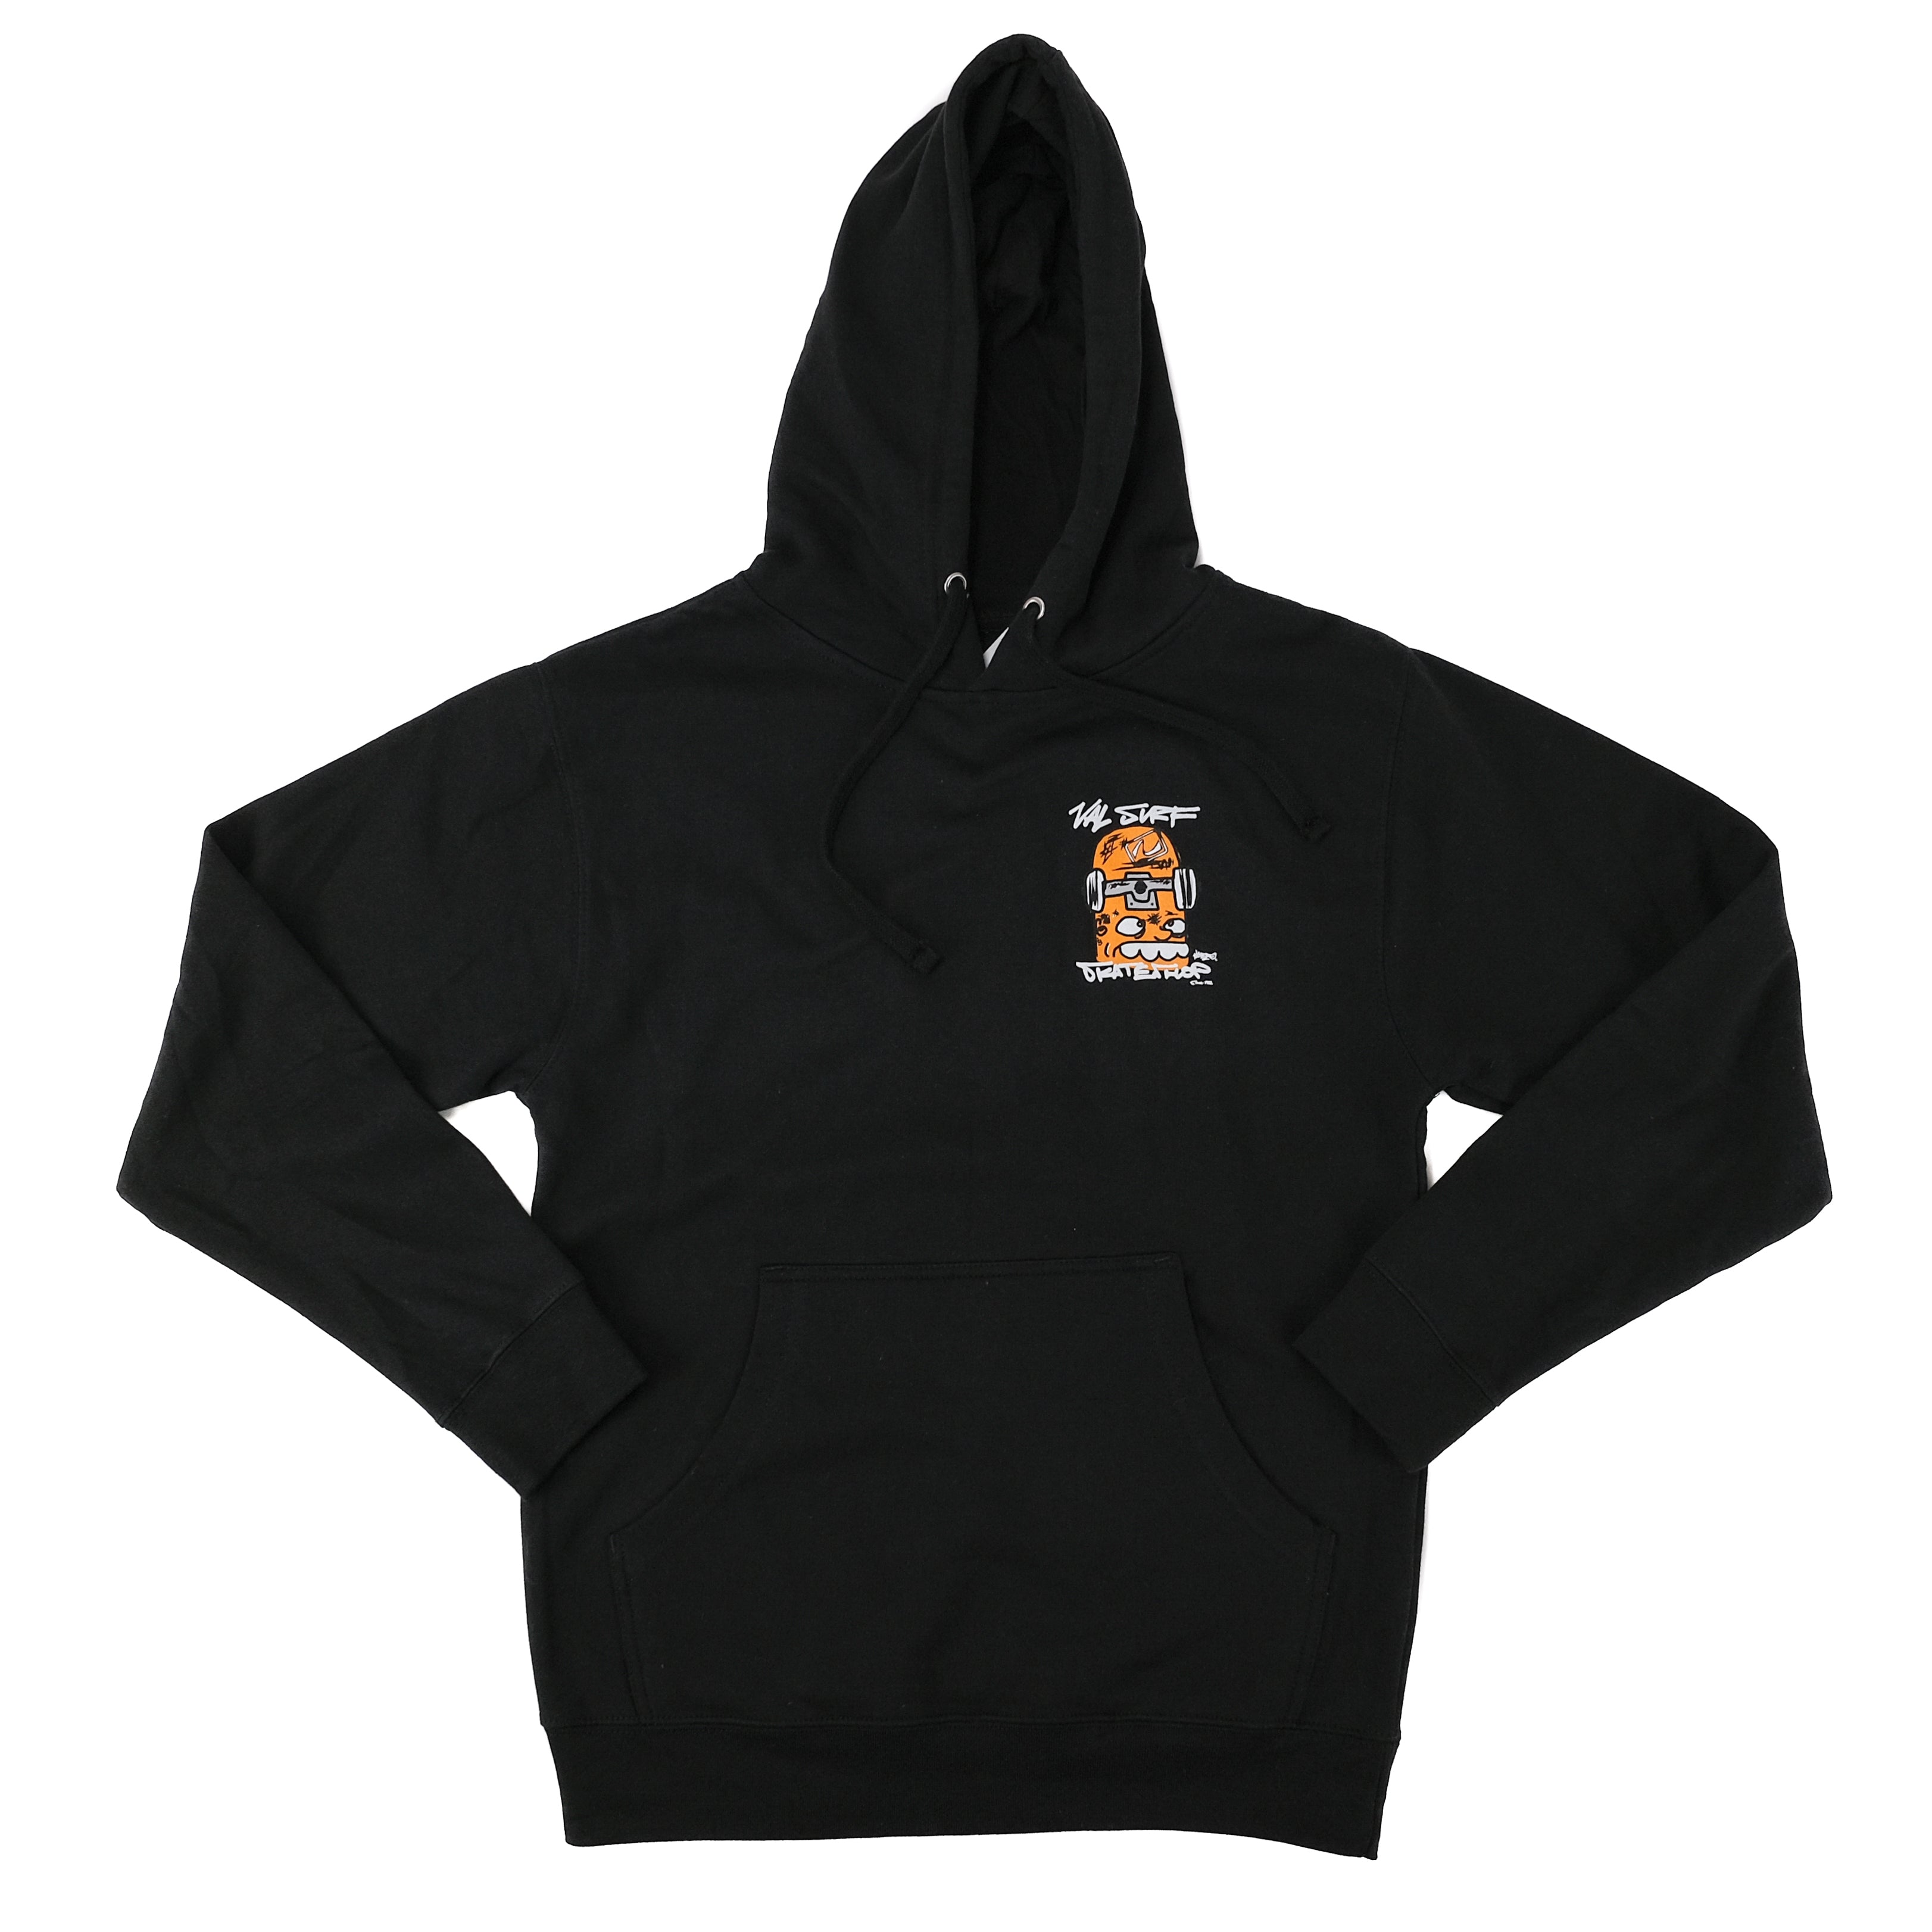 "Skate Glaboe" Midweight Hooded Pullover Sweatshirt - Black